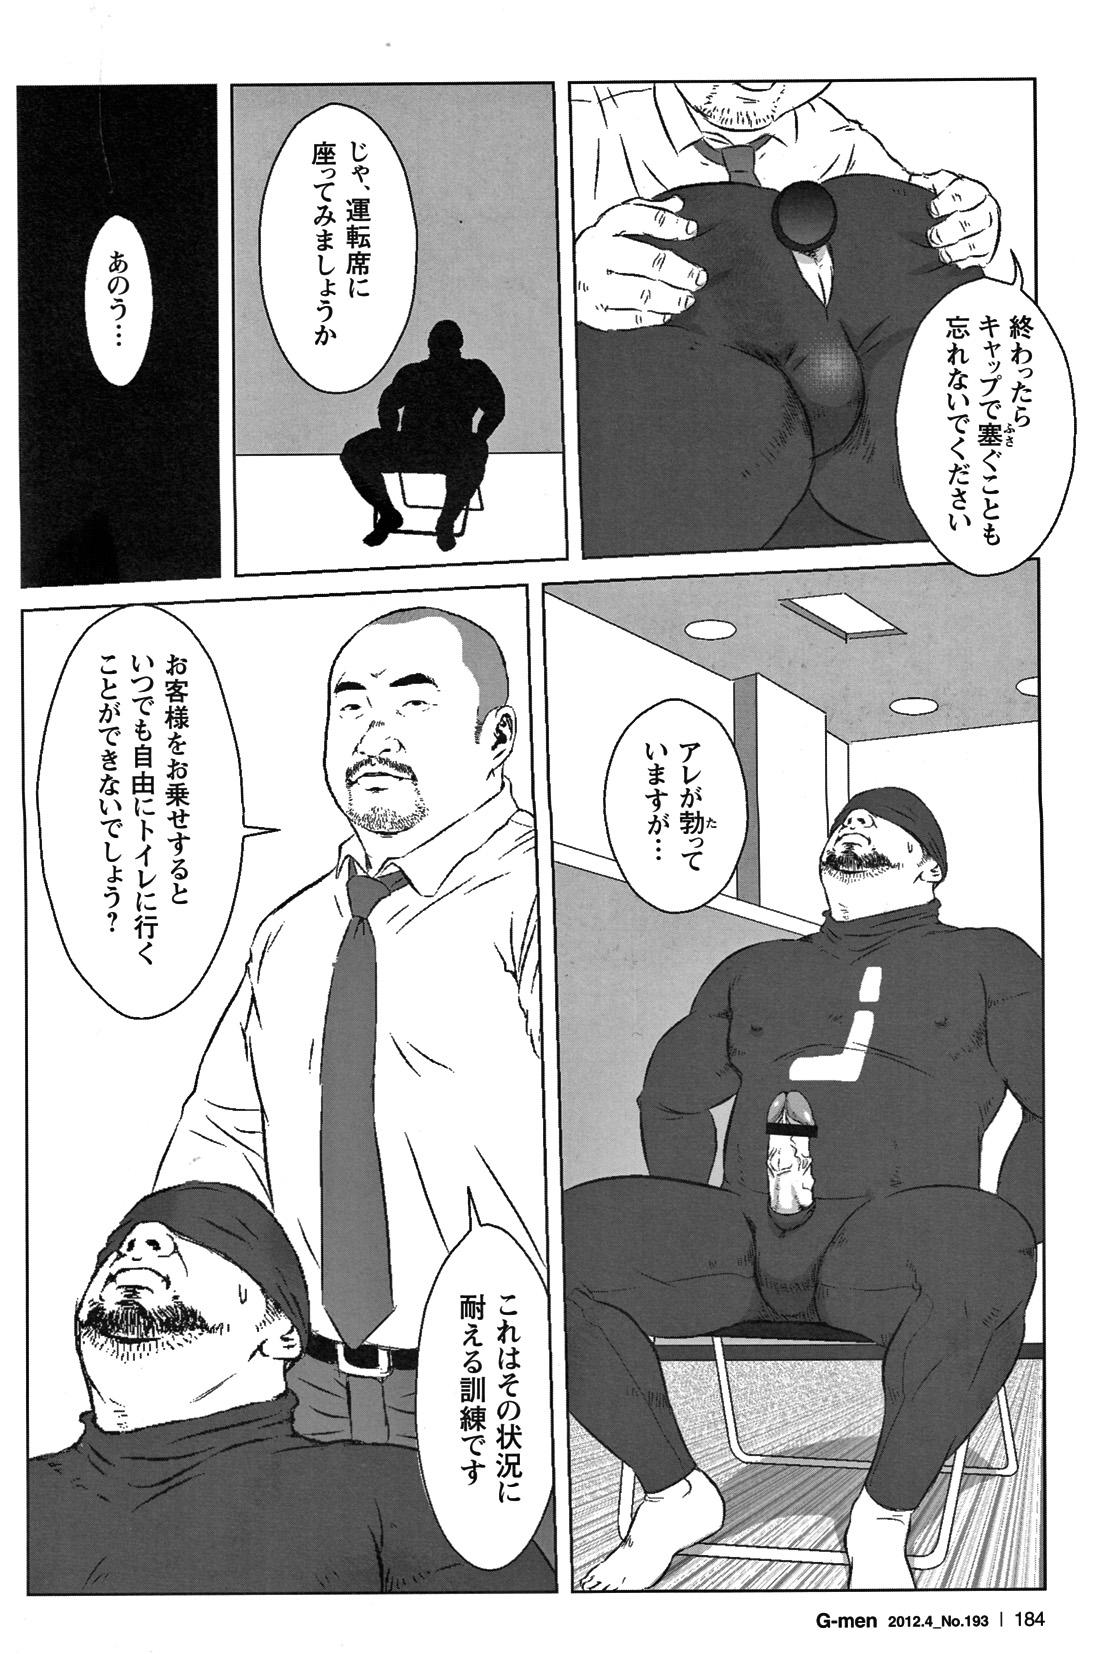 Comic G-men Gaho No.05 168